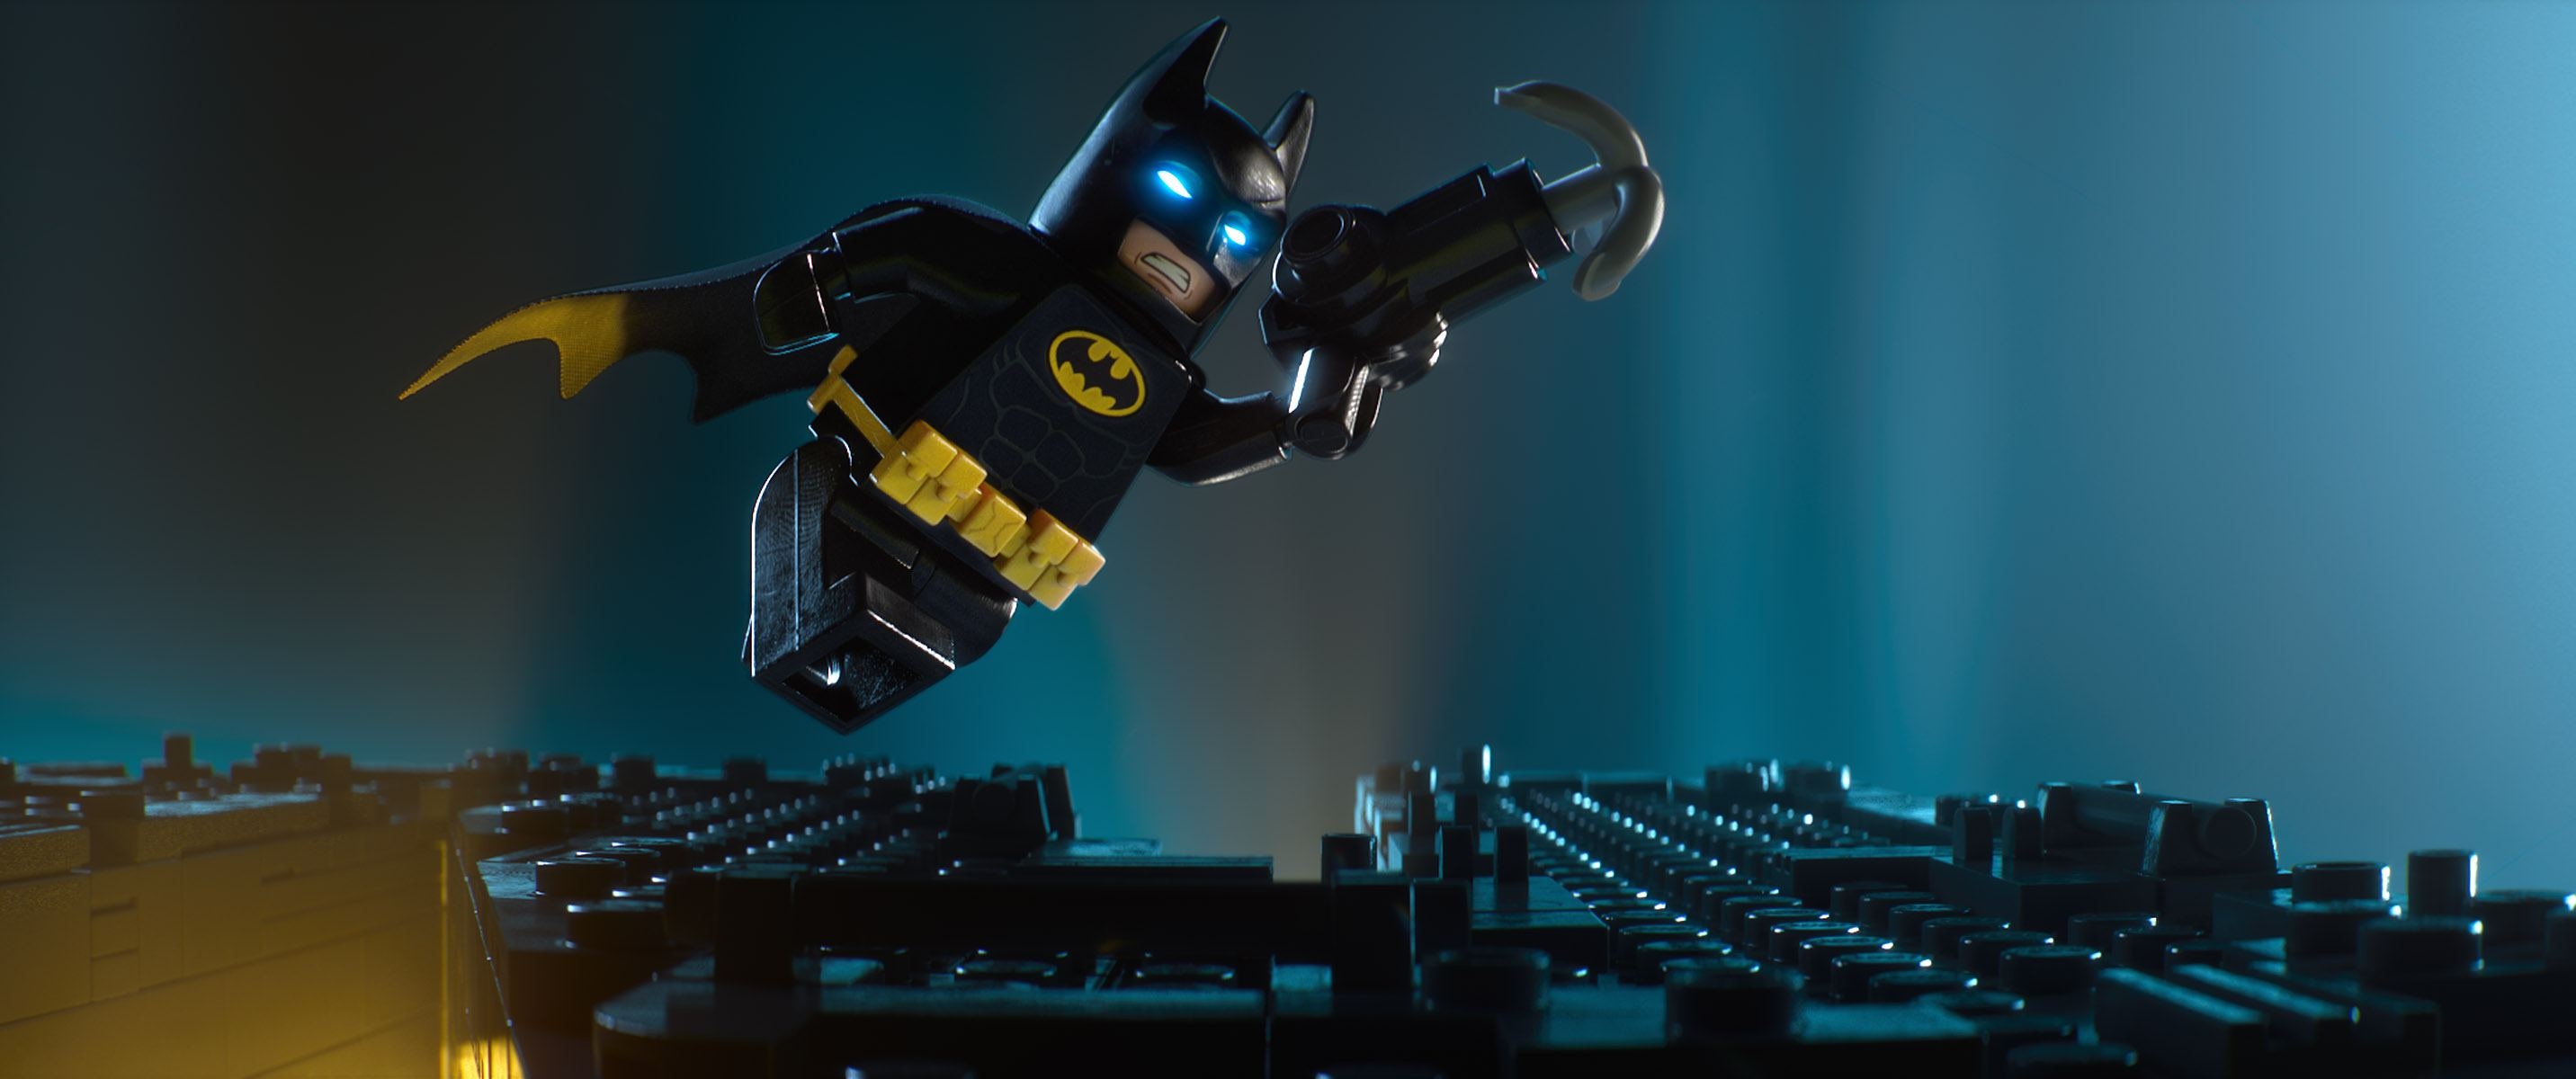 Lego Batman characters, Animated adventure, Gotham City guardian, Epic showdown, 2870x1200 Dual Screen Desktop